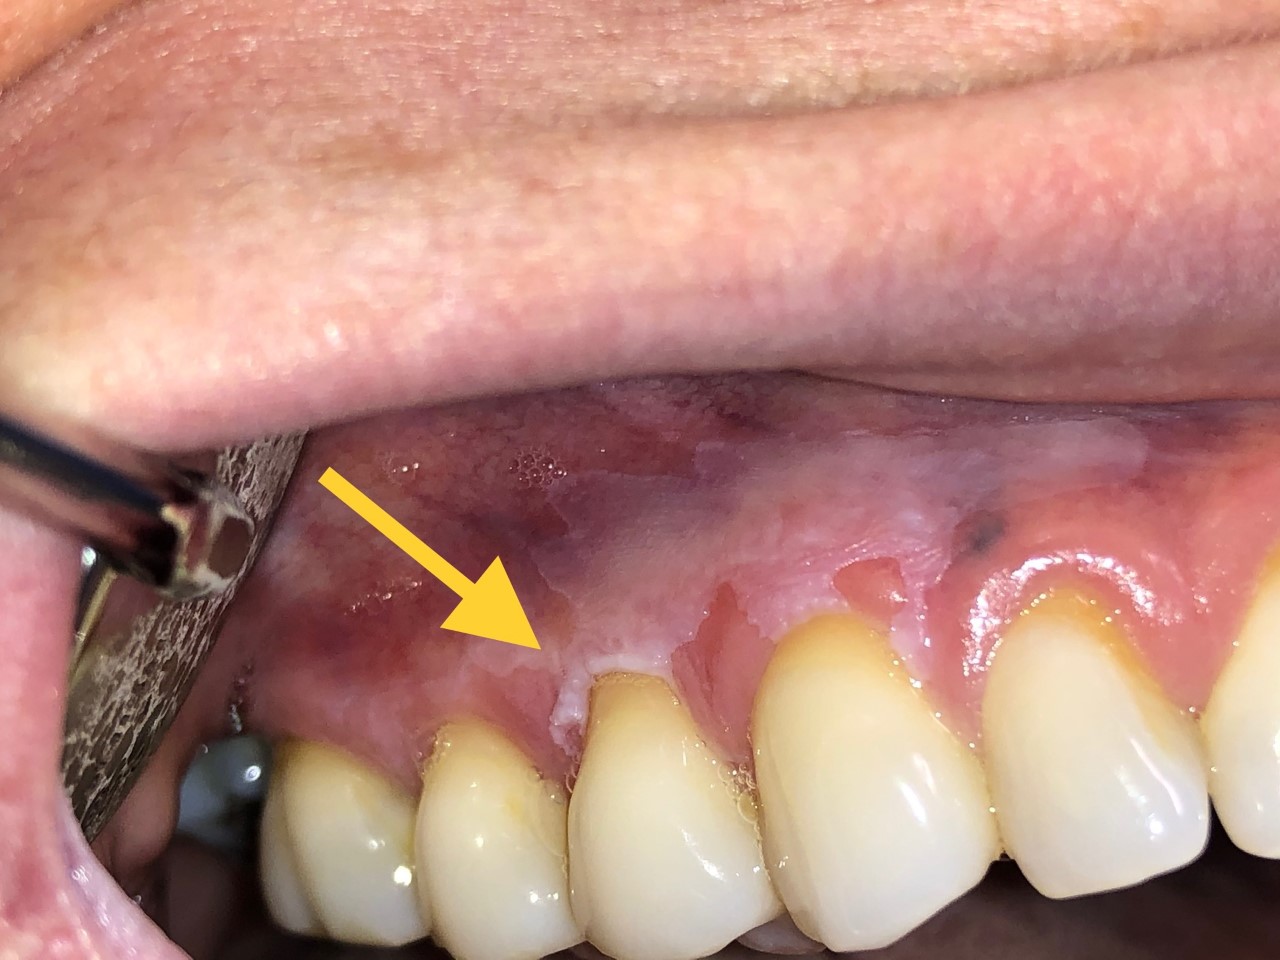 Premalignant Lesions Of The Oral Mucosa Article